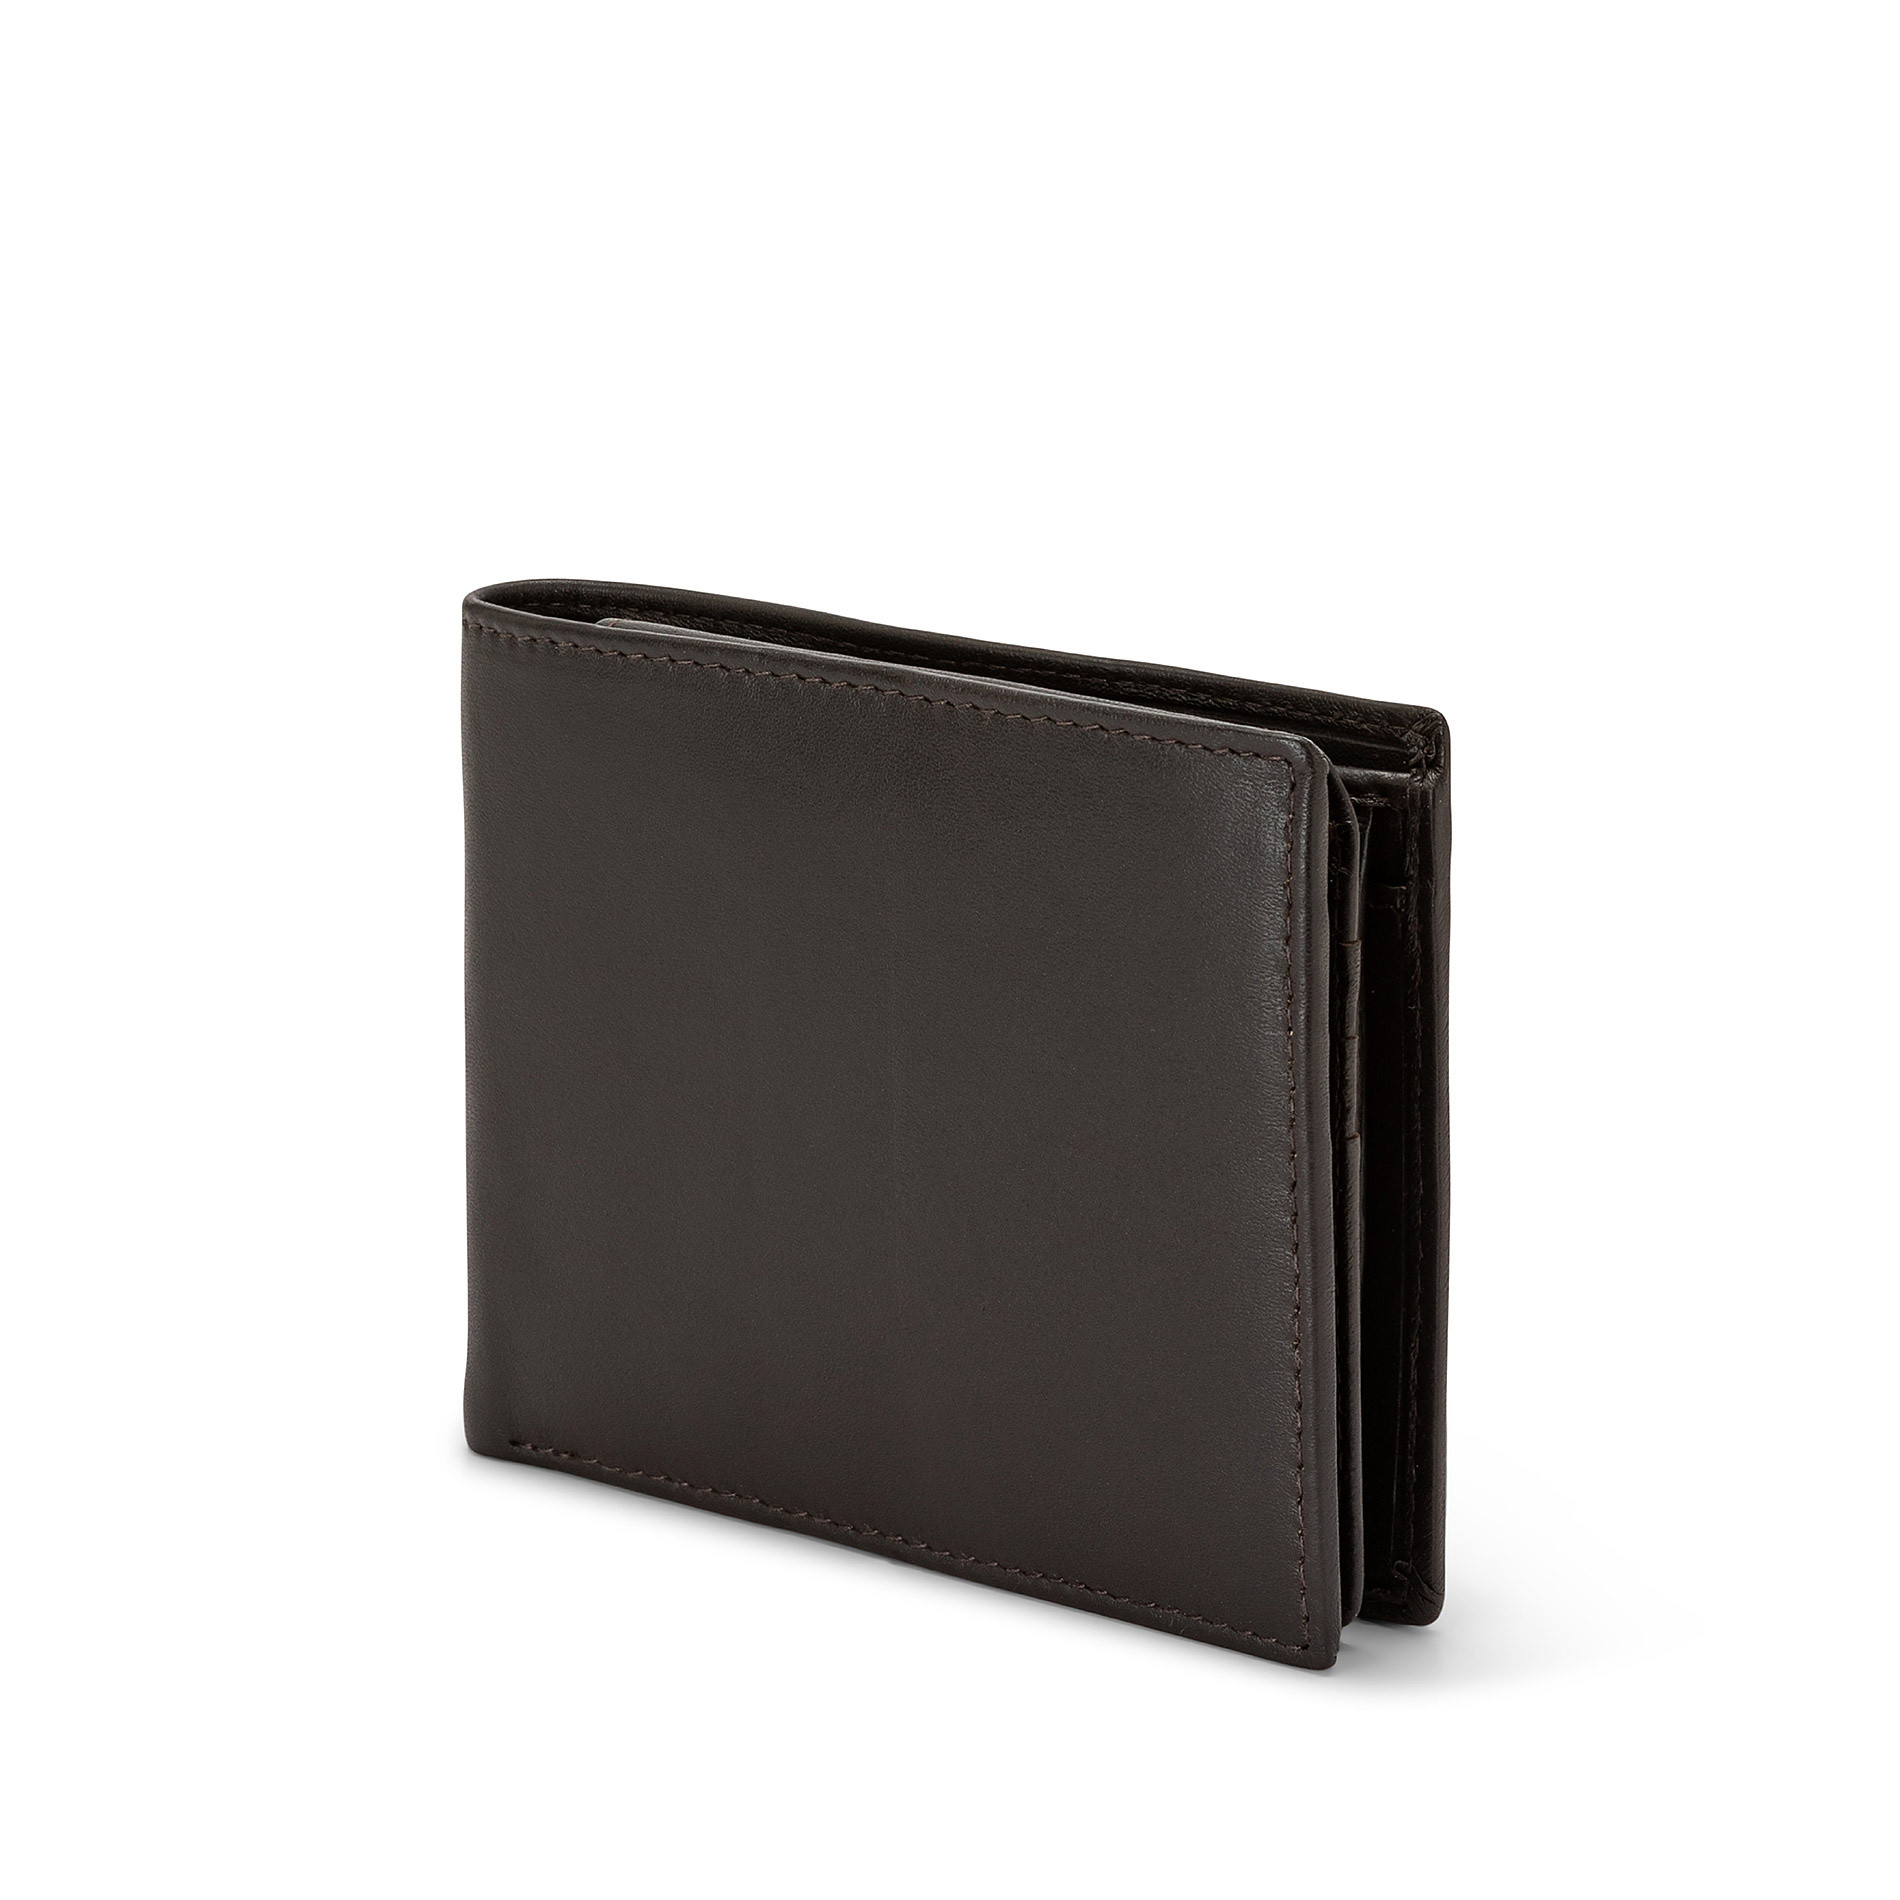 Luca D'Altieri leather wallet, Dark Brown, large image number 1